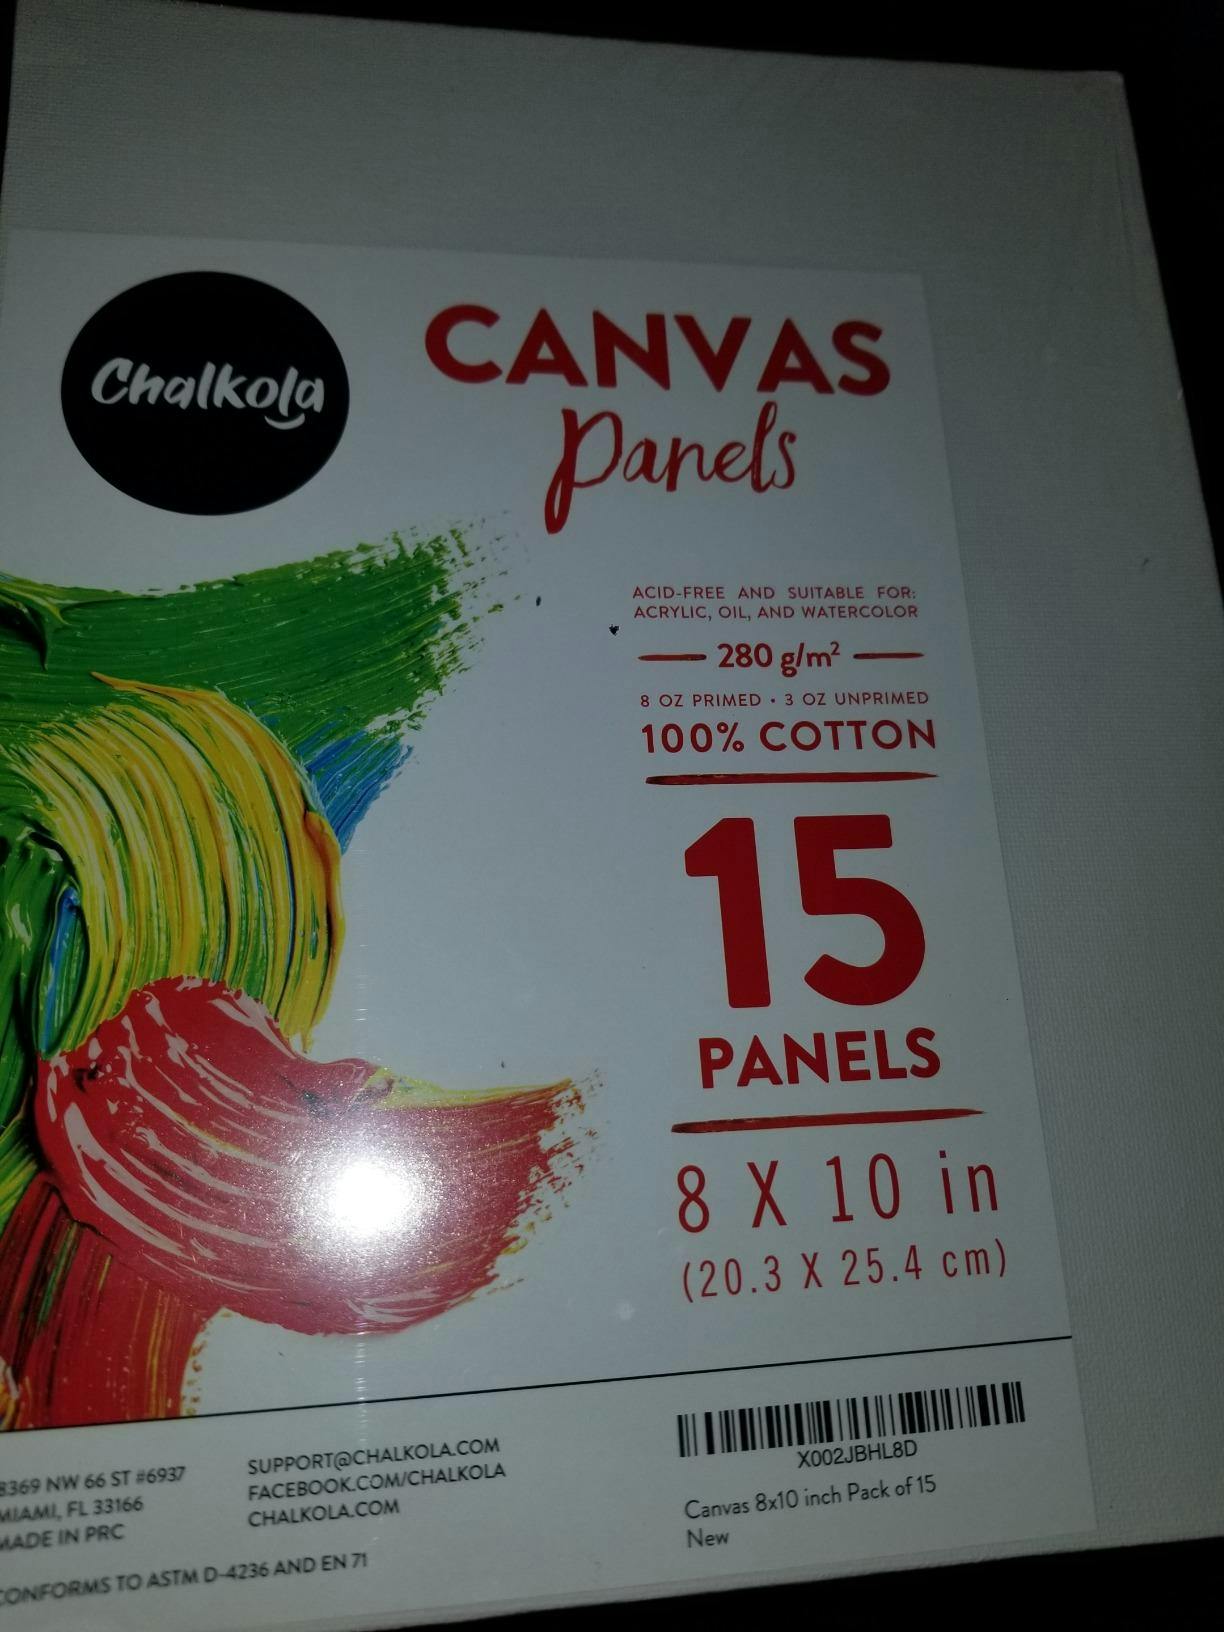  Chalkola Black Canvas Panels 8x10 inch (15 Pack